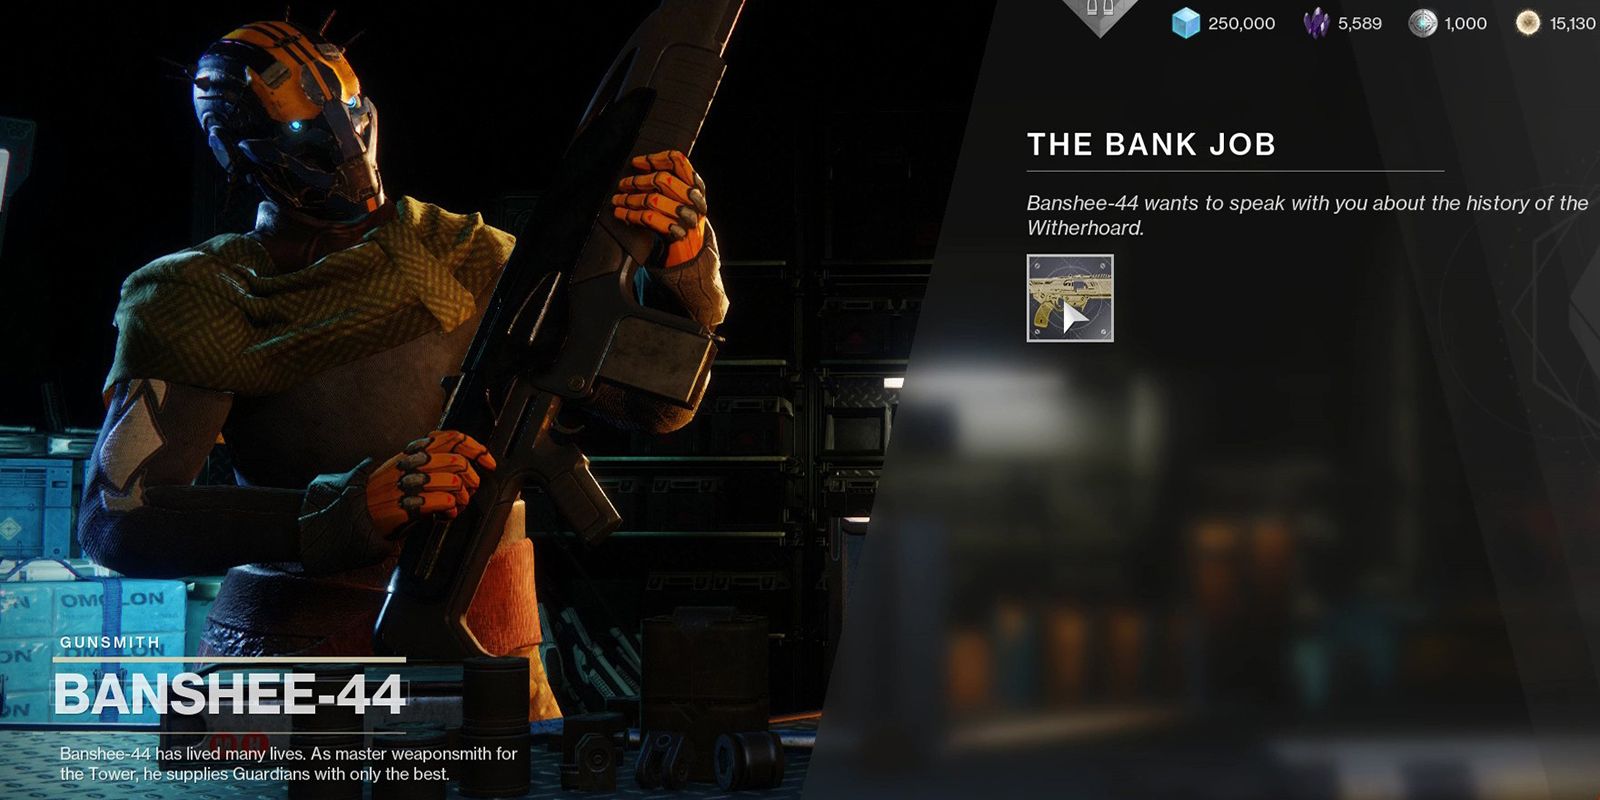 Destiny 2 Banshee-44 Работа в банке